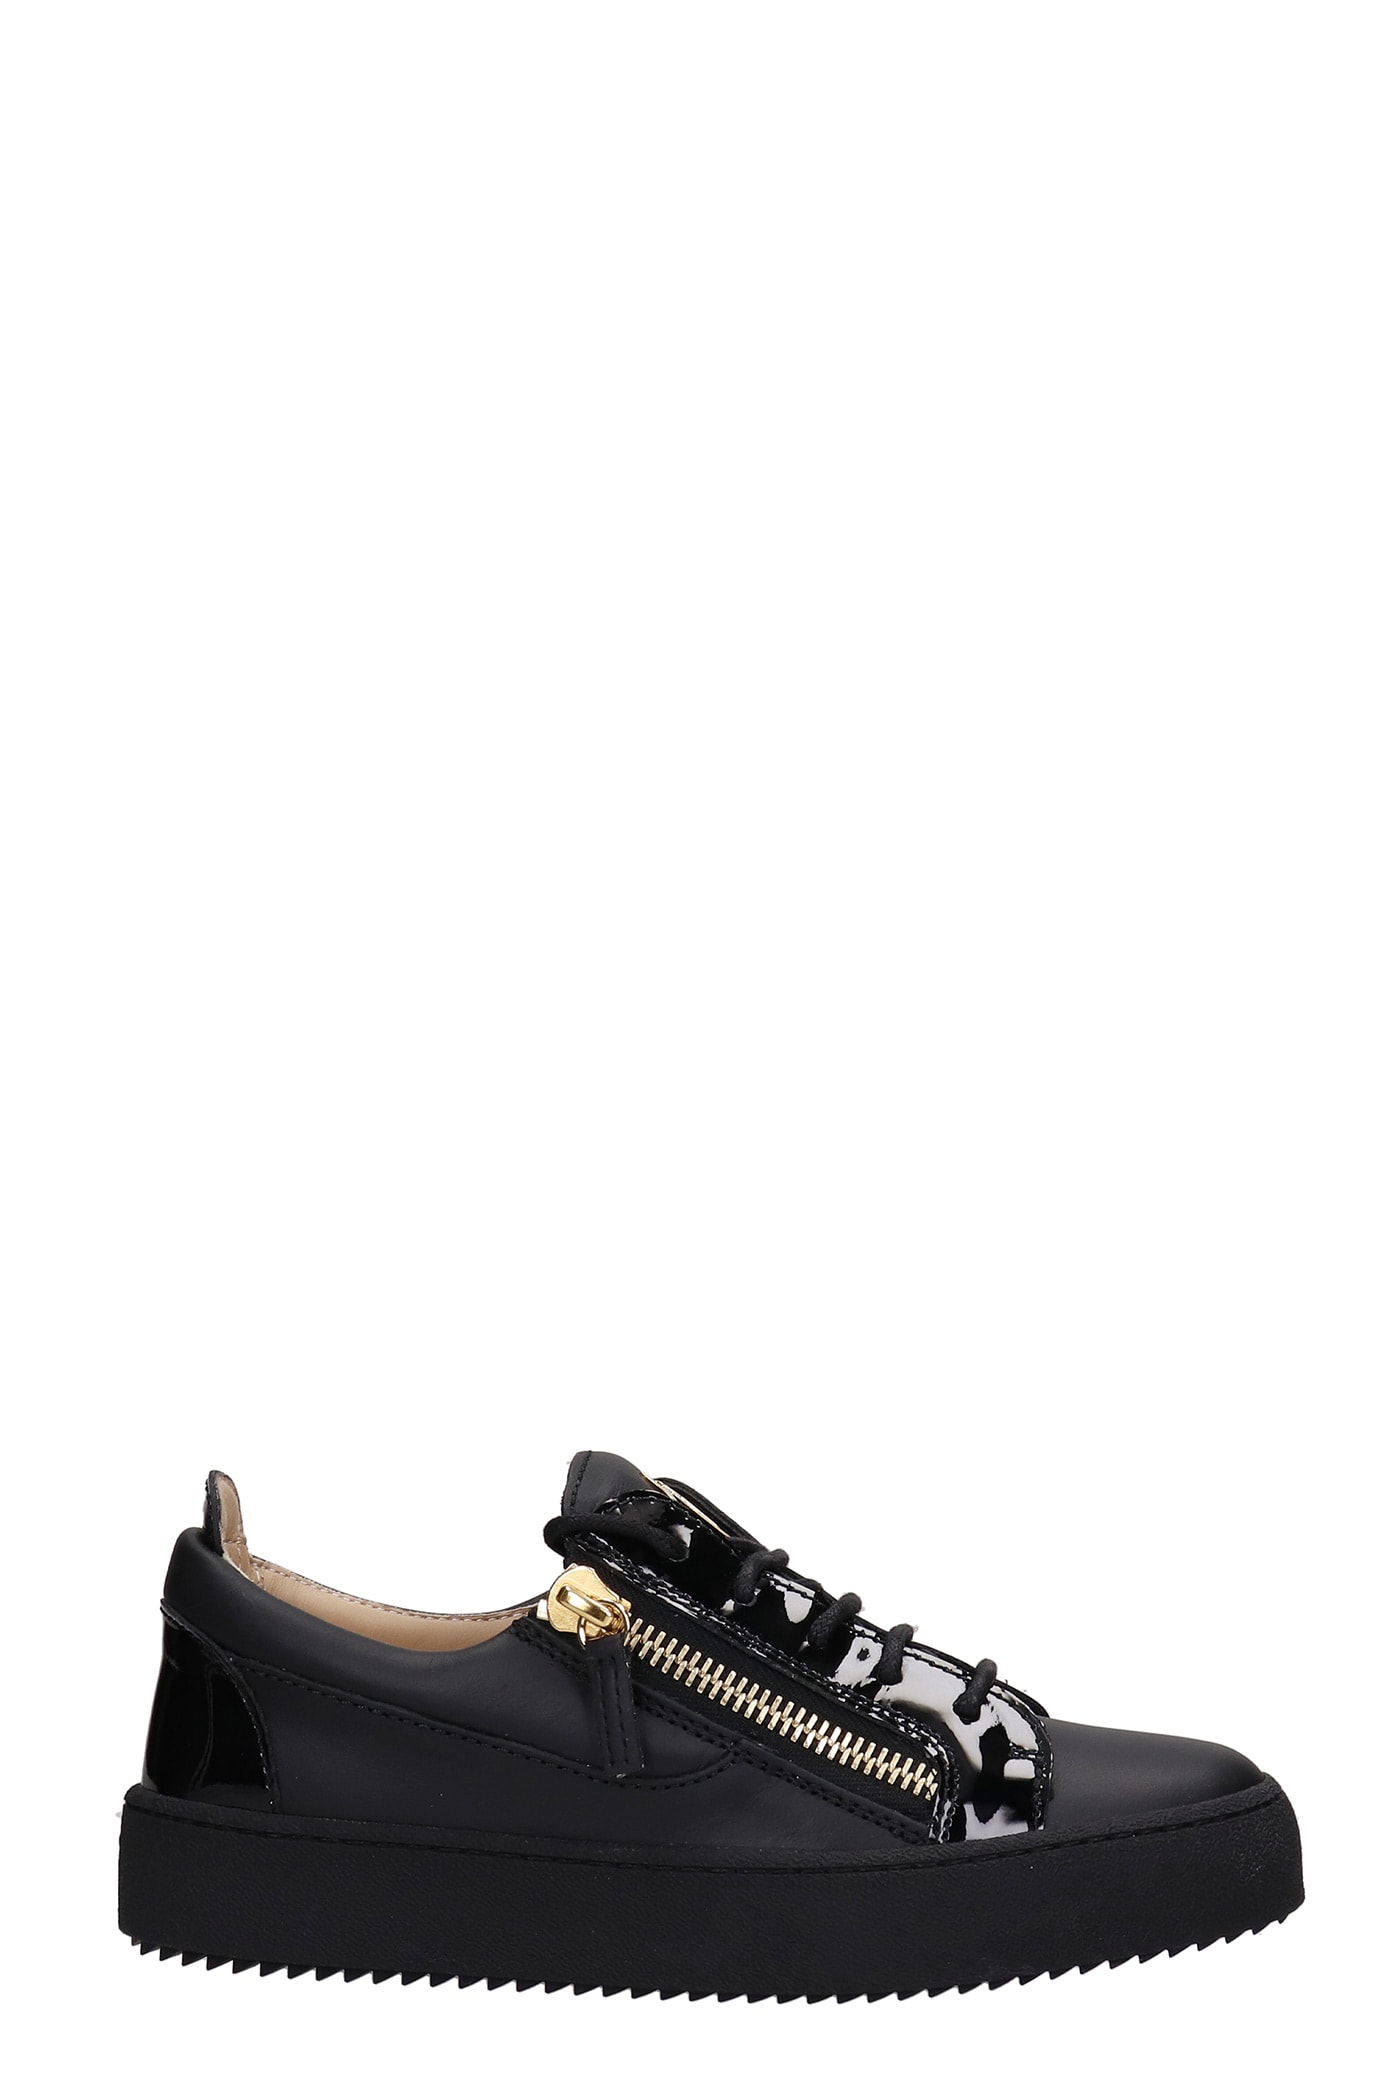 Giuseppe Zanotti Gail Sneakers In Black Leather